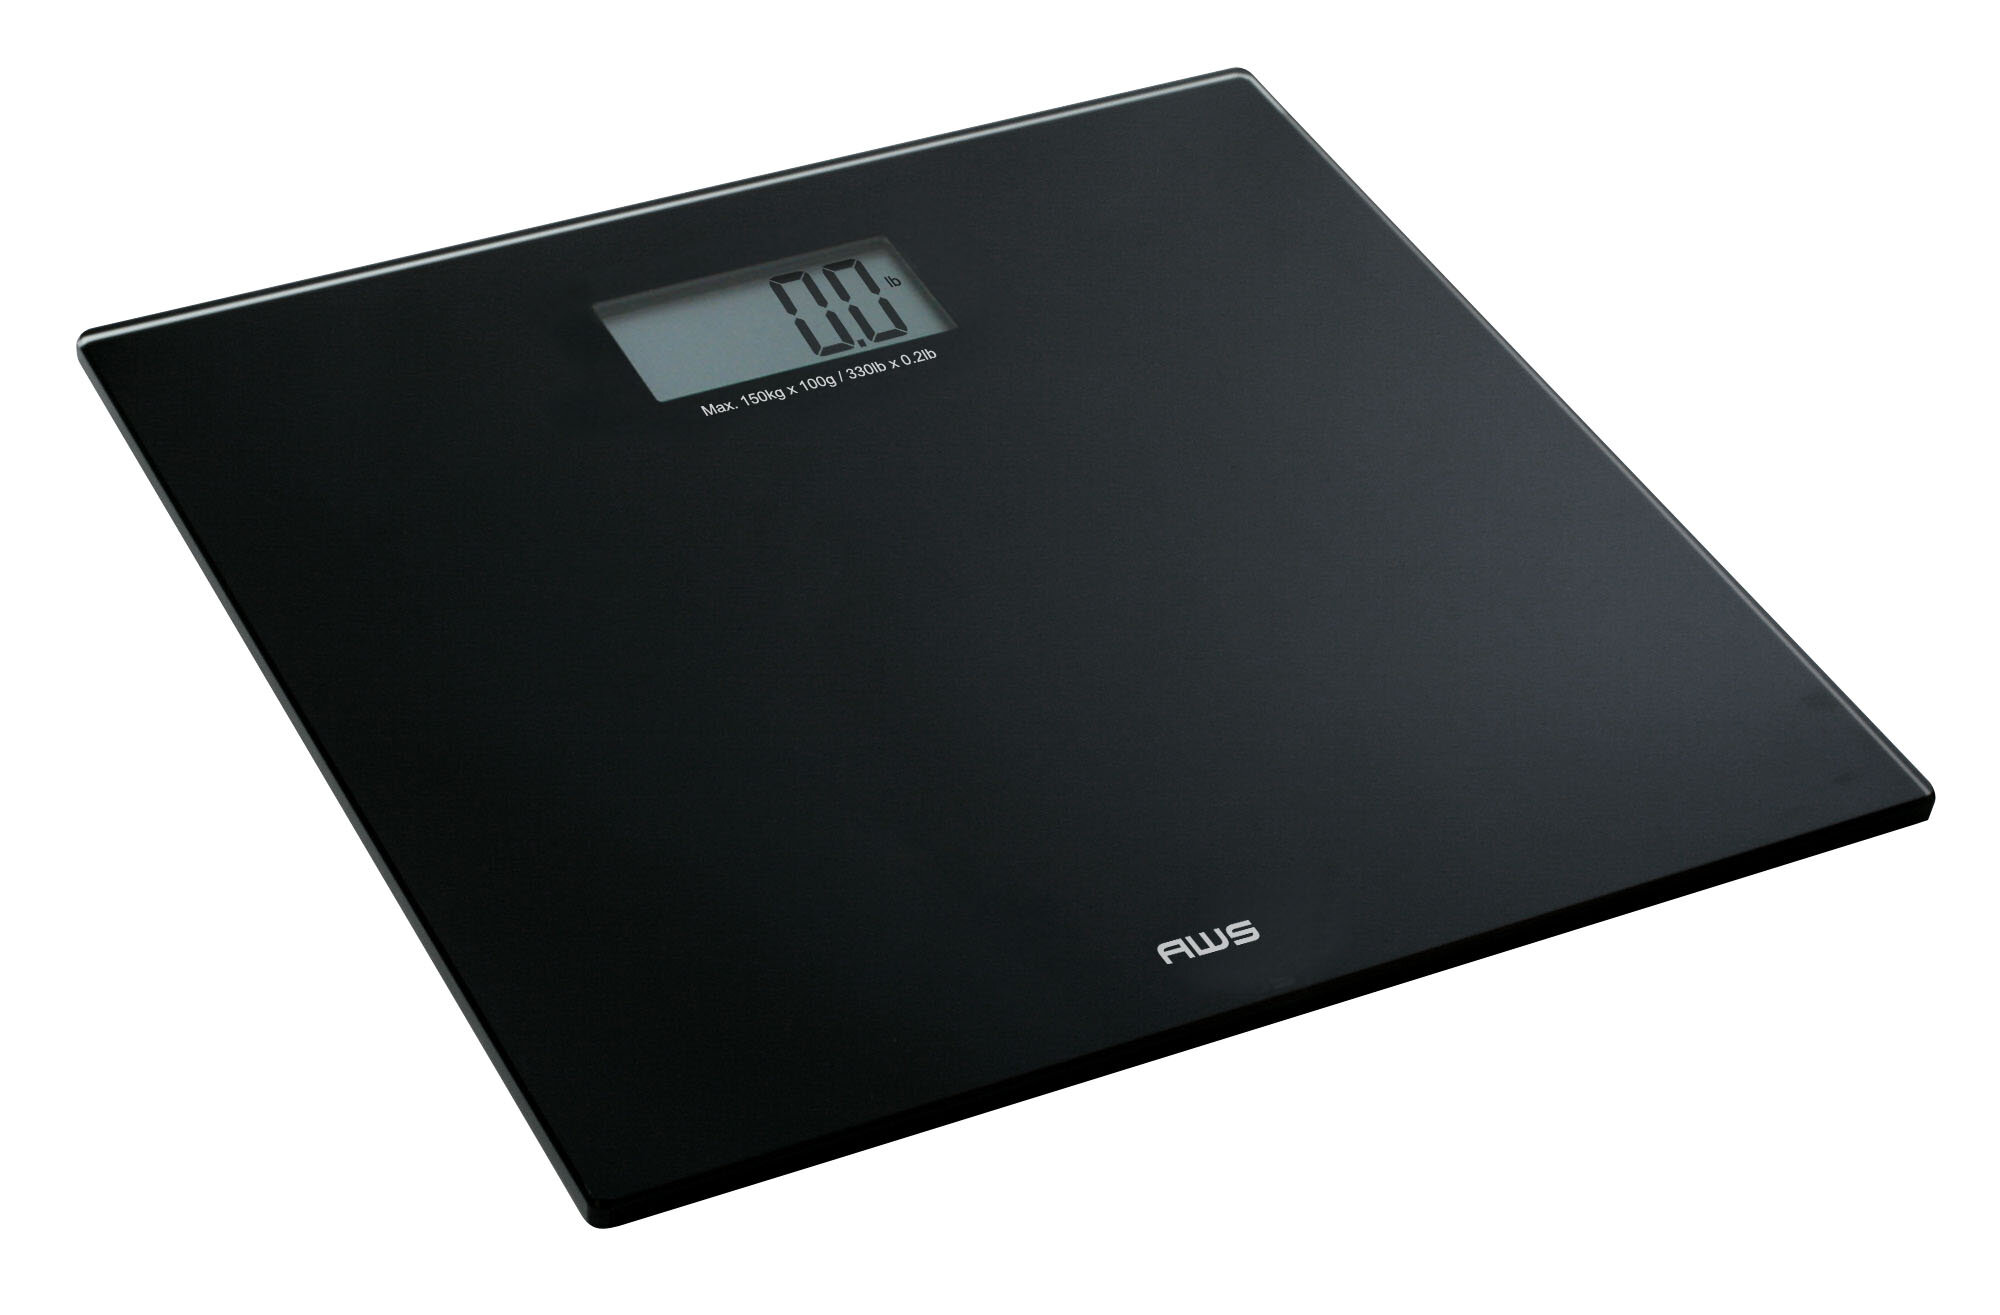 American Weigh Scales Digital Bathroom Scale